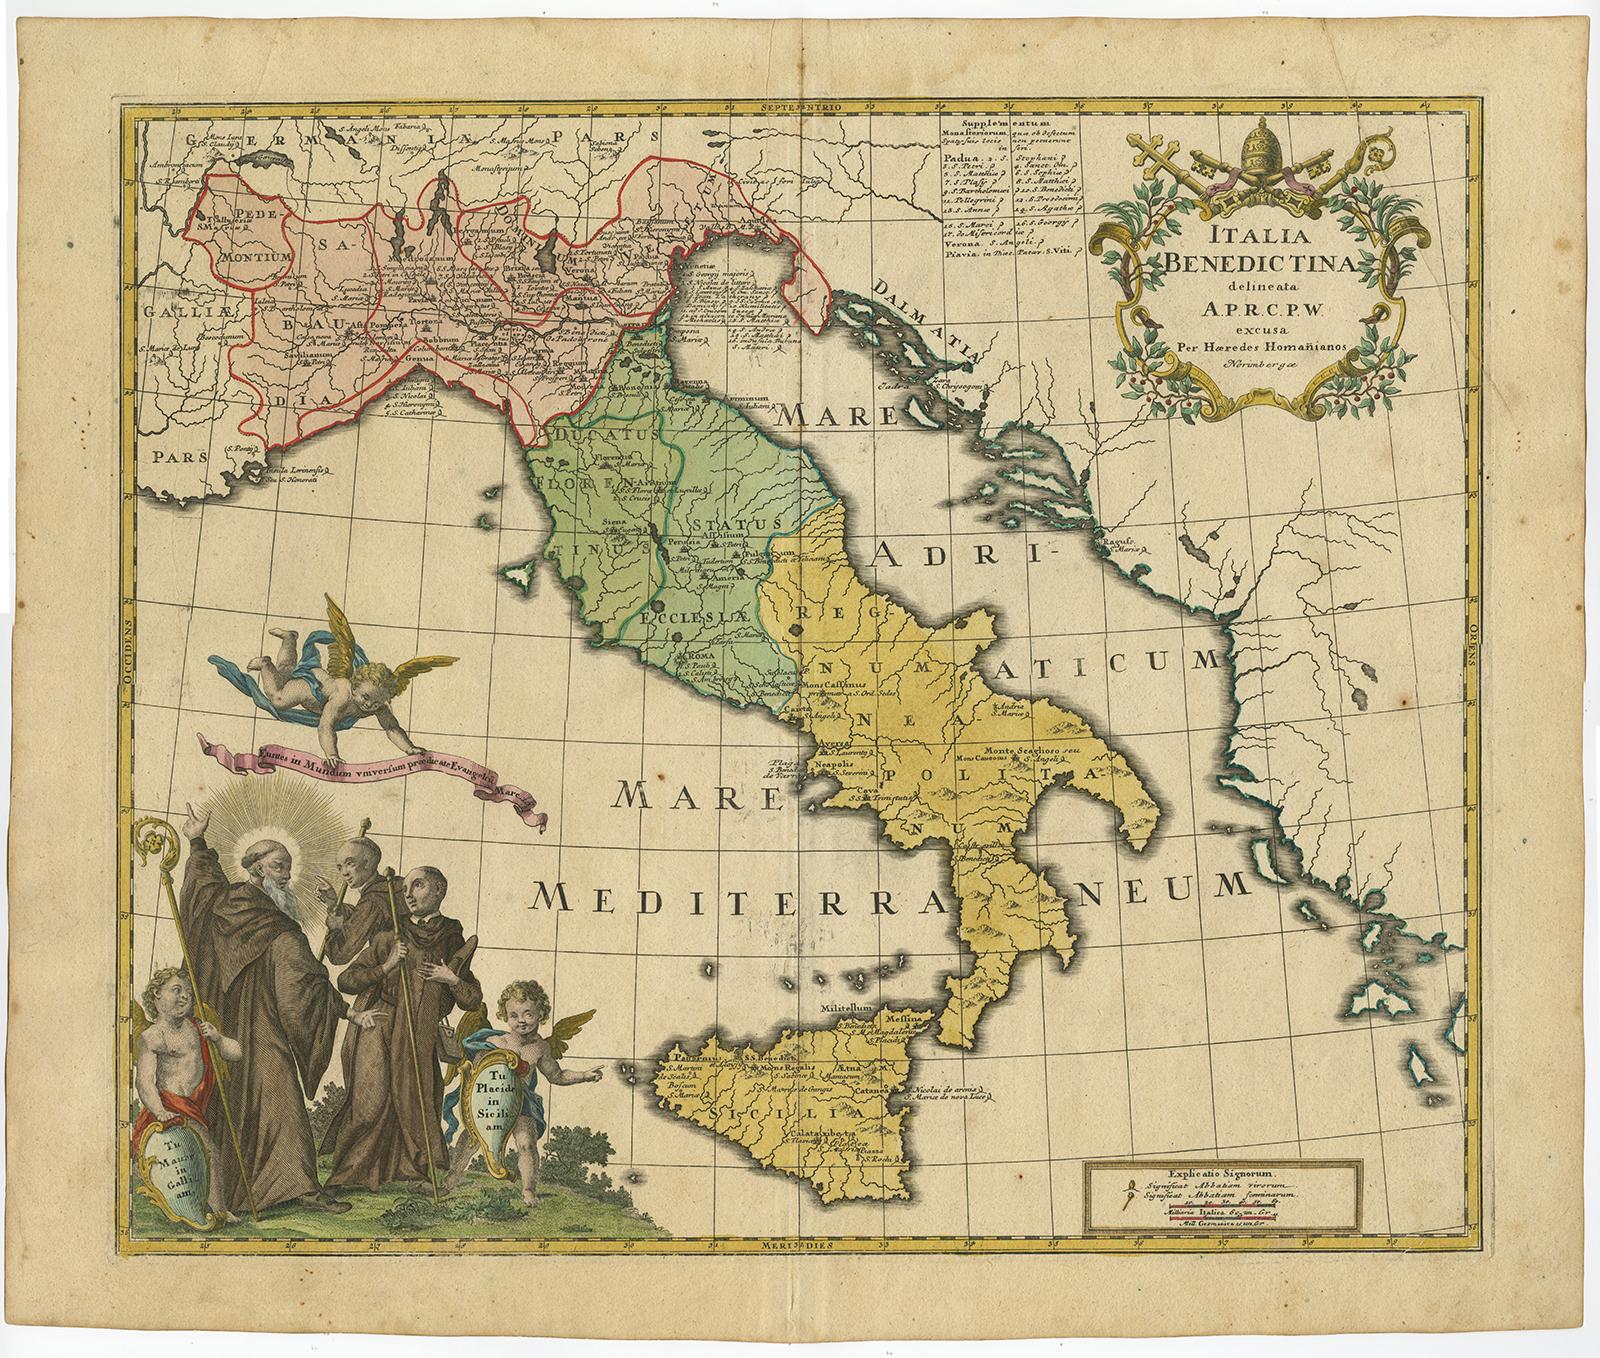 Antique Map Italy Sicily Monastery Benedictine Monks Homann Heirs